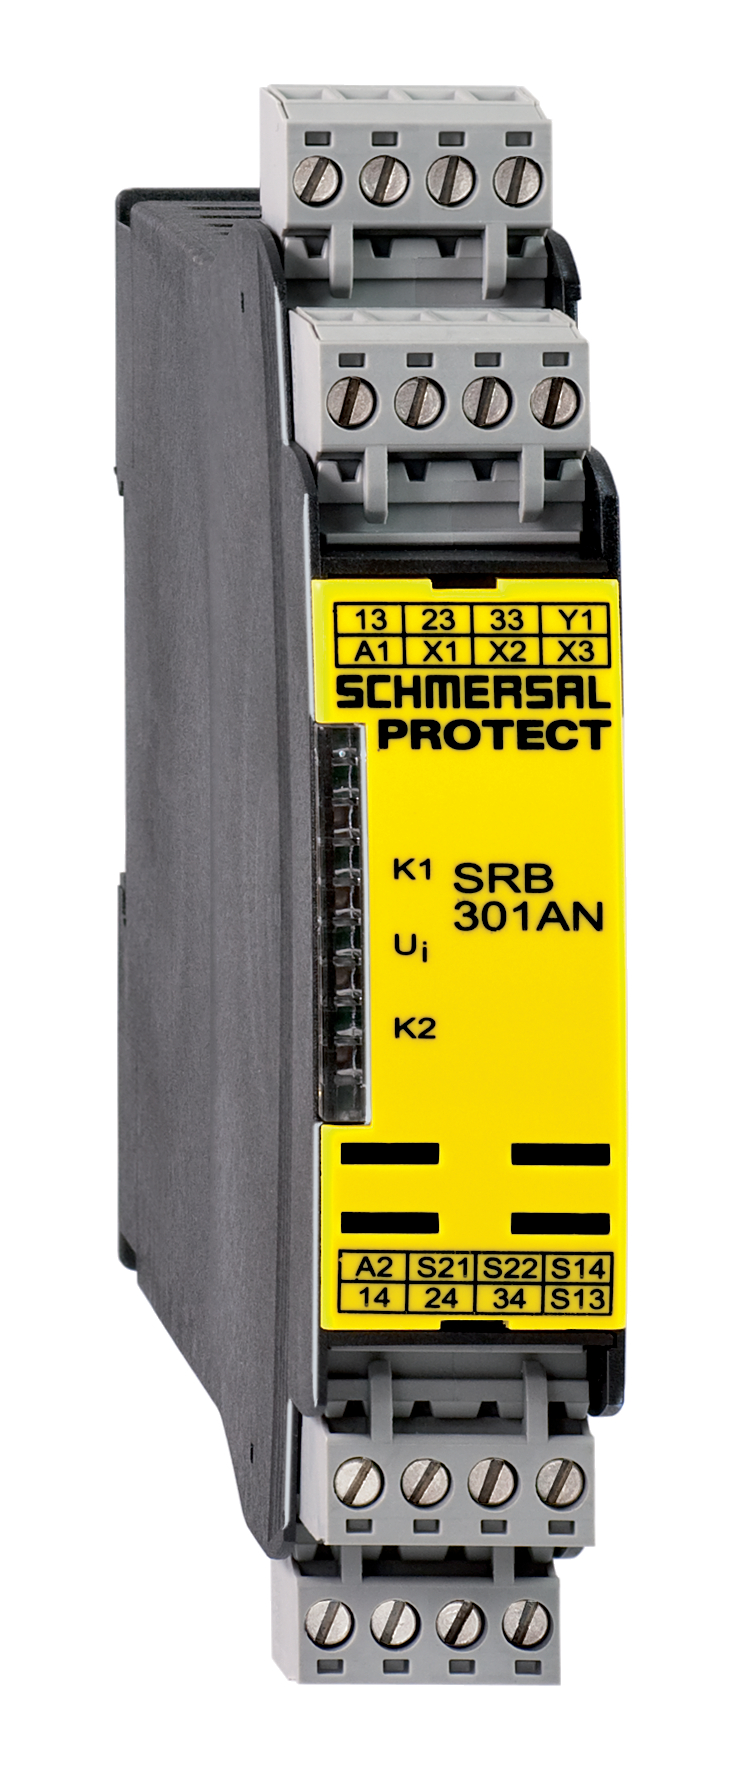 Safety relay SRB301SQ 230V Schmersal 101170100